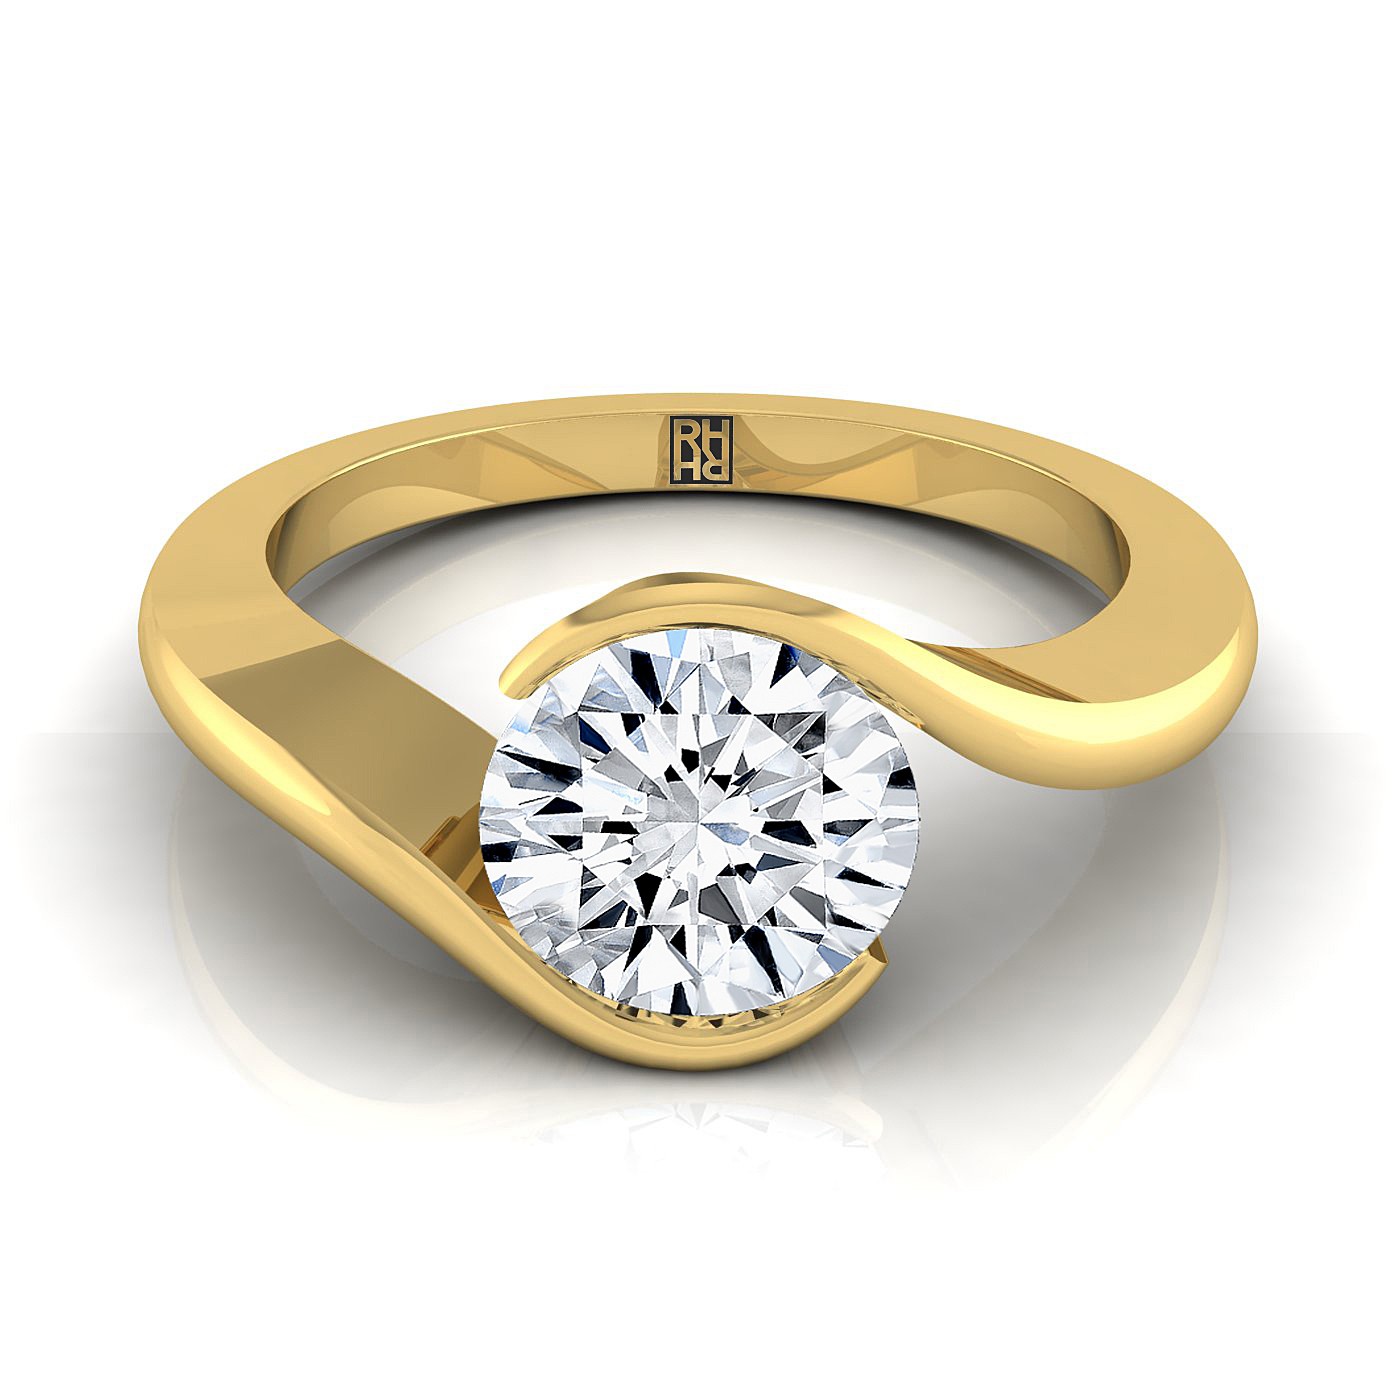 Modern diamond ring with a sleek and stylish design on Craiyon